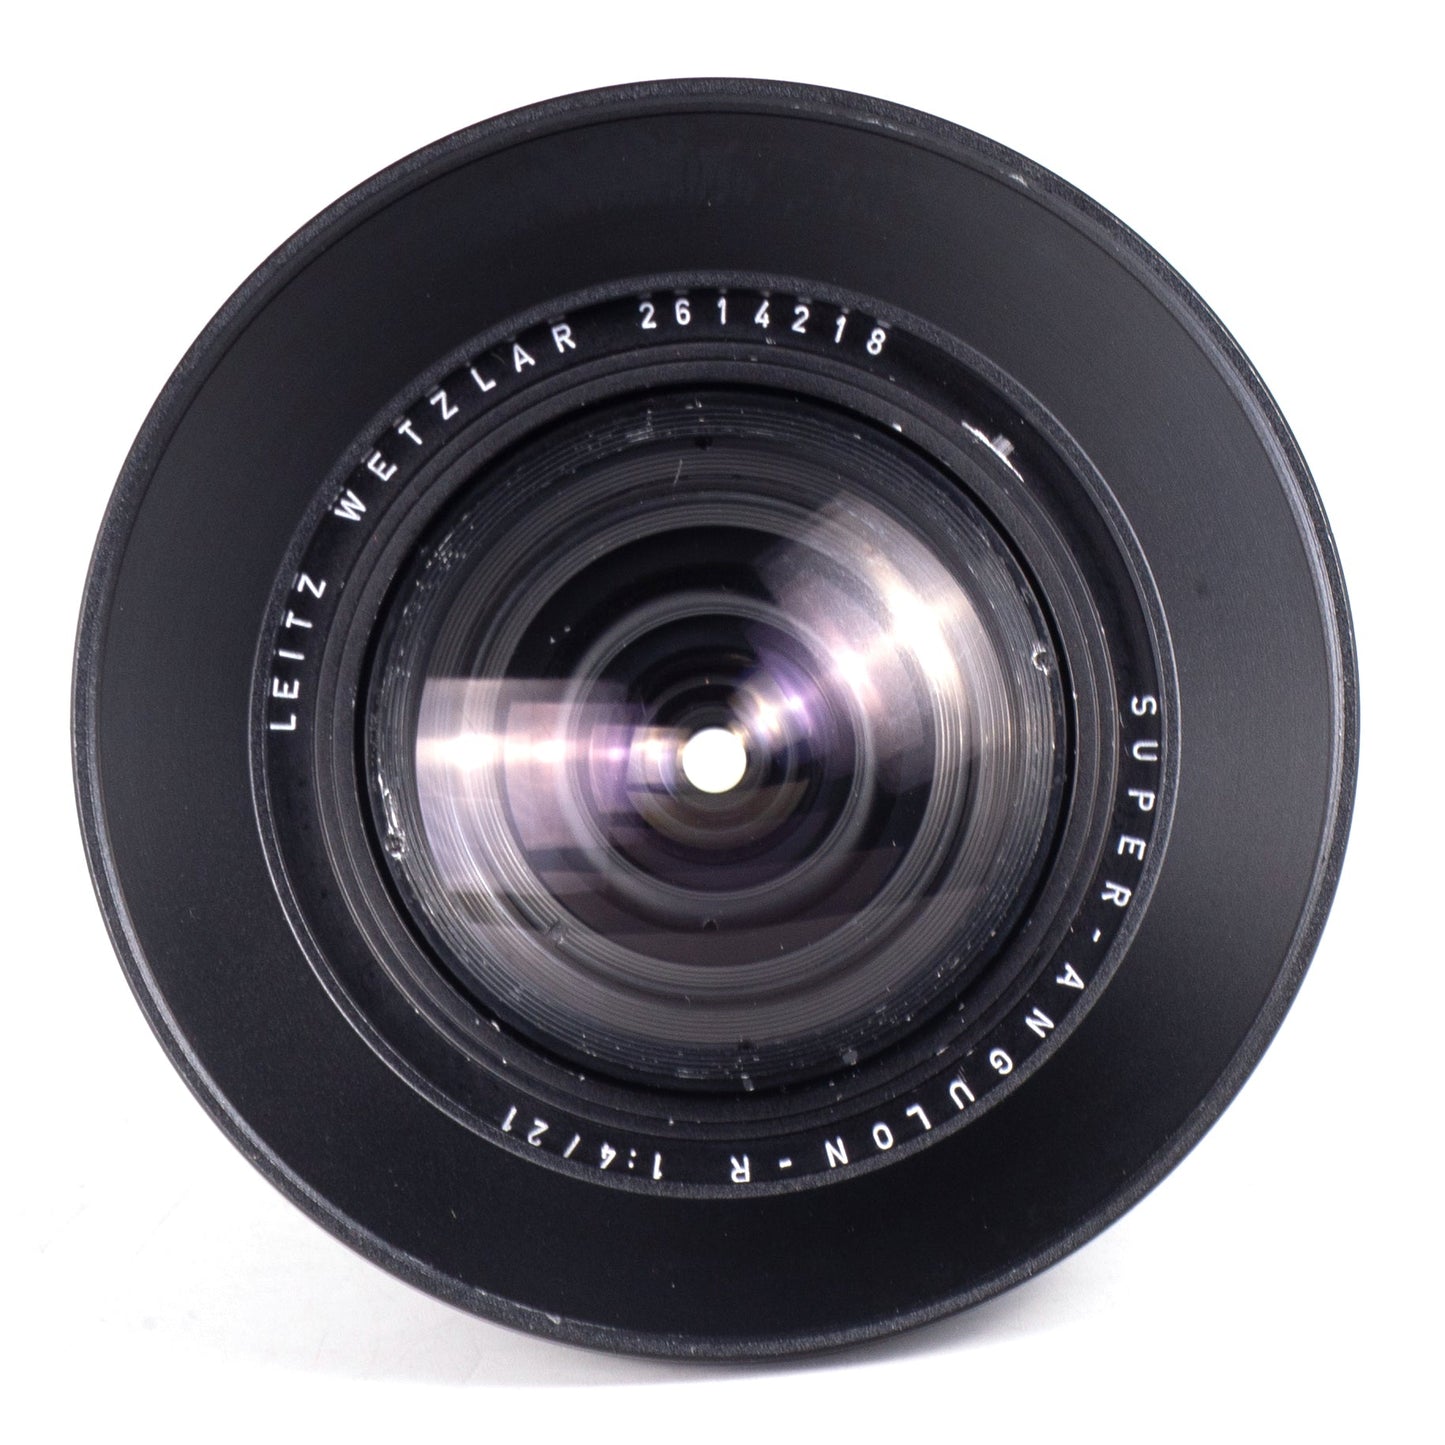 Leitz Wetzlar Super - Angulon - R 21mm F4 Cine Mod Prime Lens For Canon EF! - TerPhoto Store